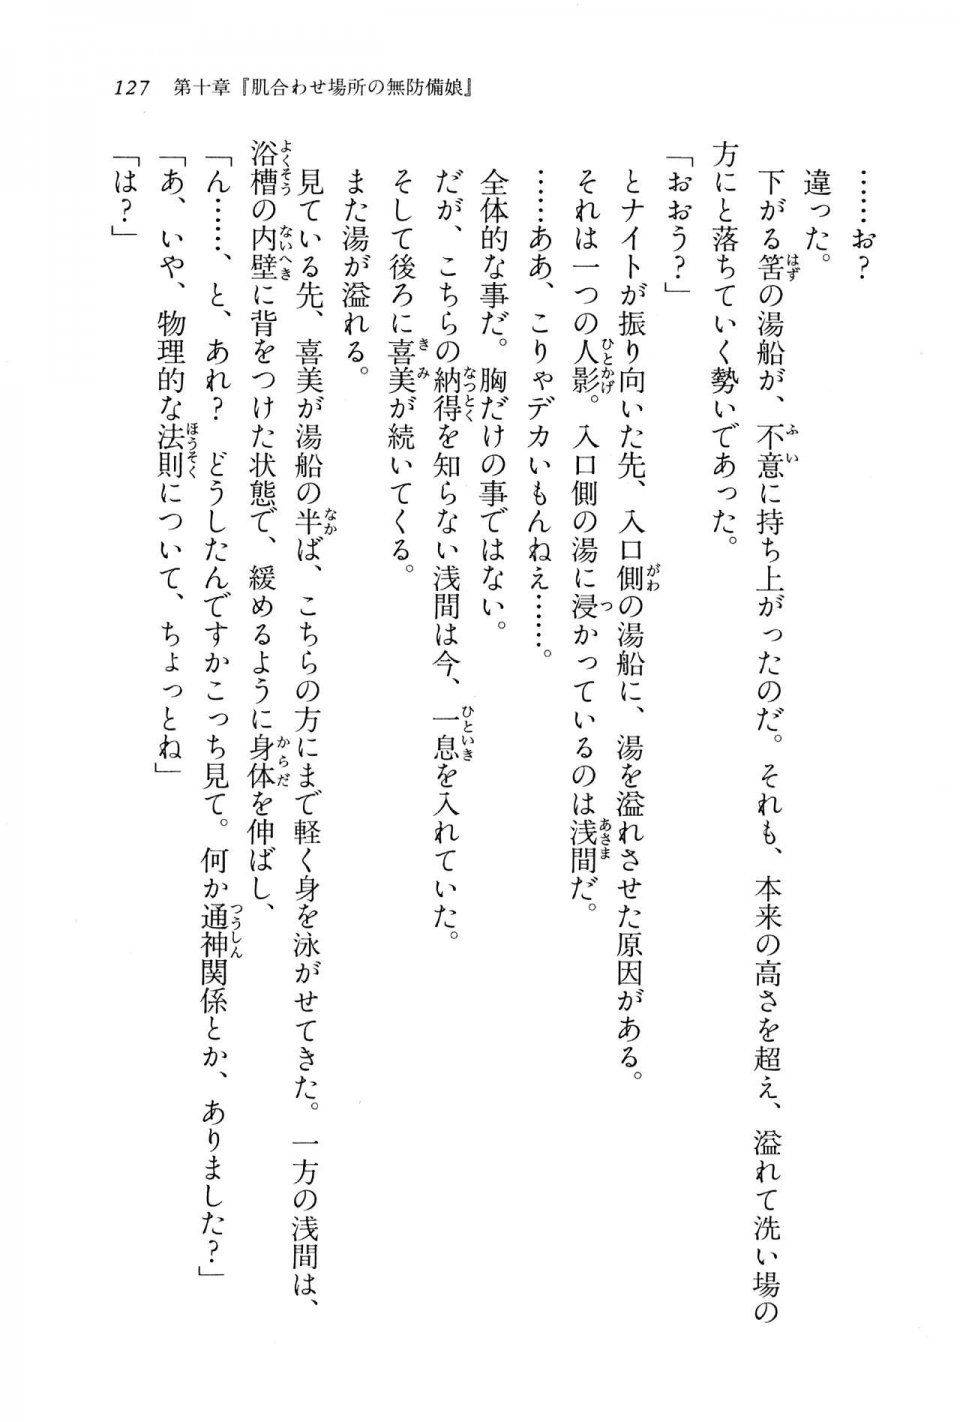 Kyoukai Senjou no Horizon BD Special Mininovel Vol 8(4B) - Photo #131